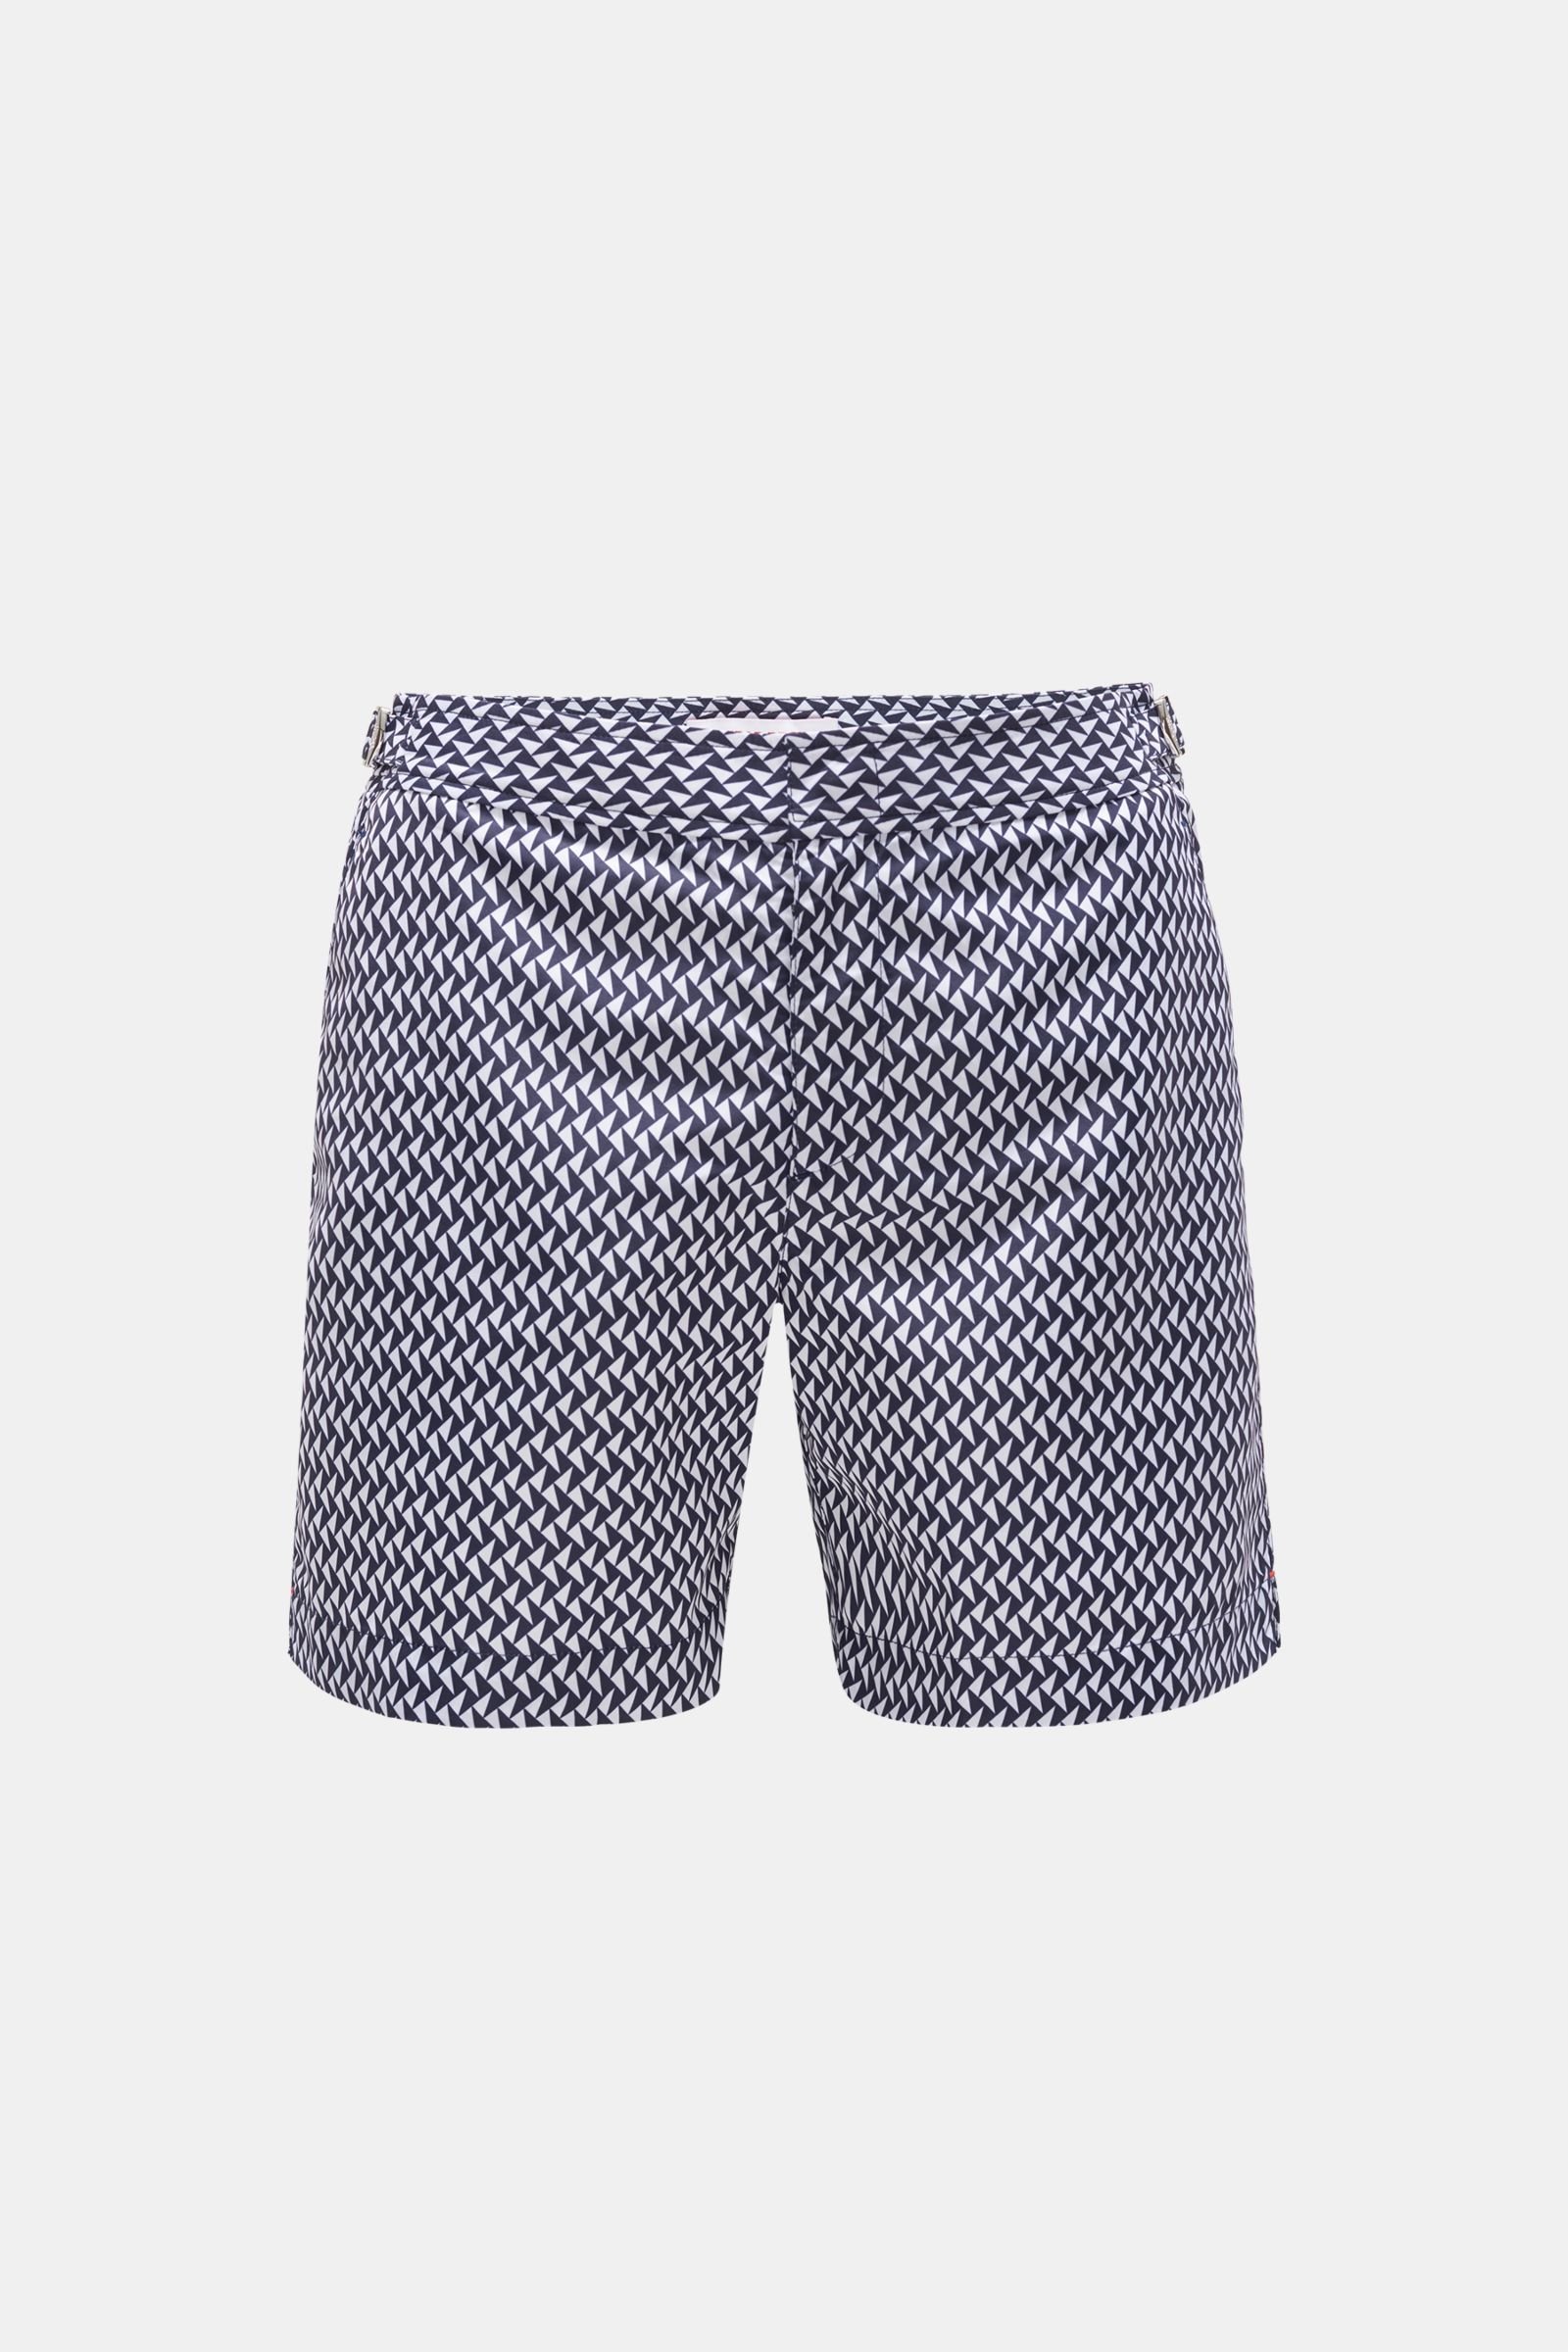 ORLEBAR BROWN swim shorts 'Bulldog' navy/off-white patterned